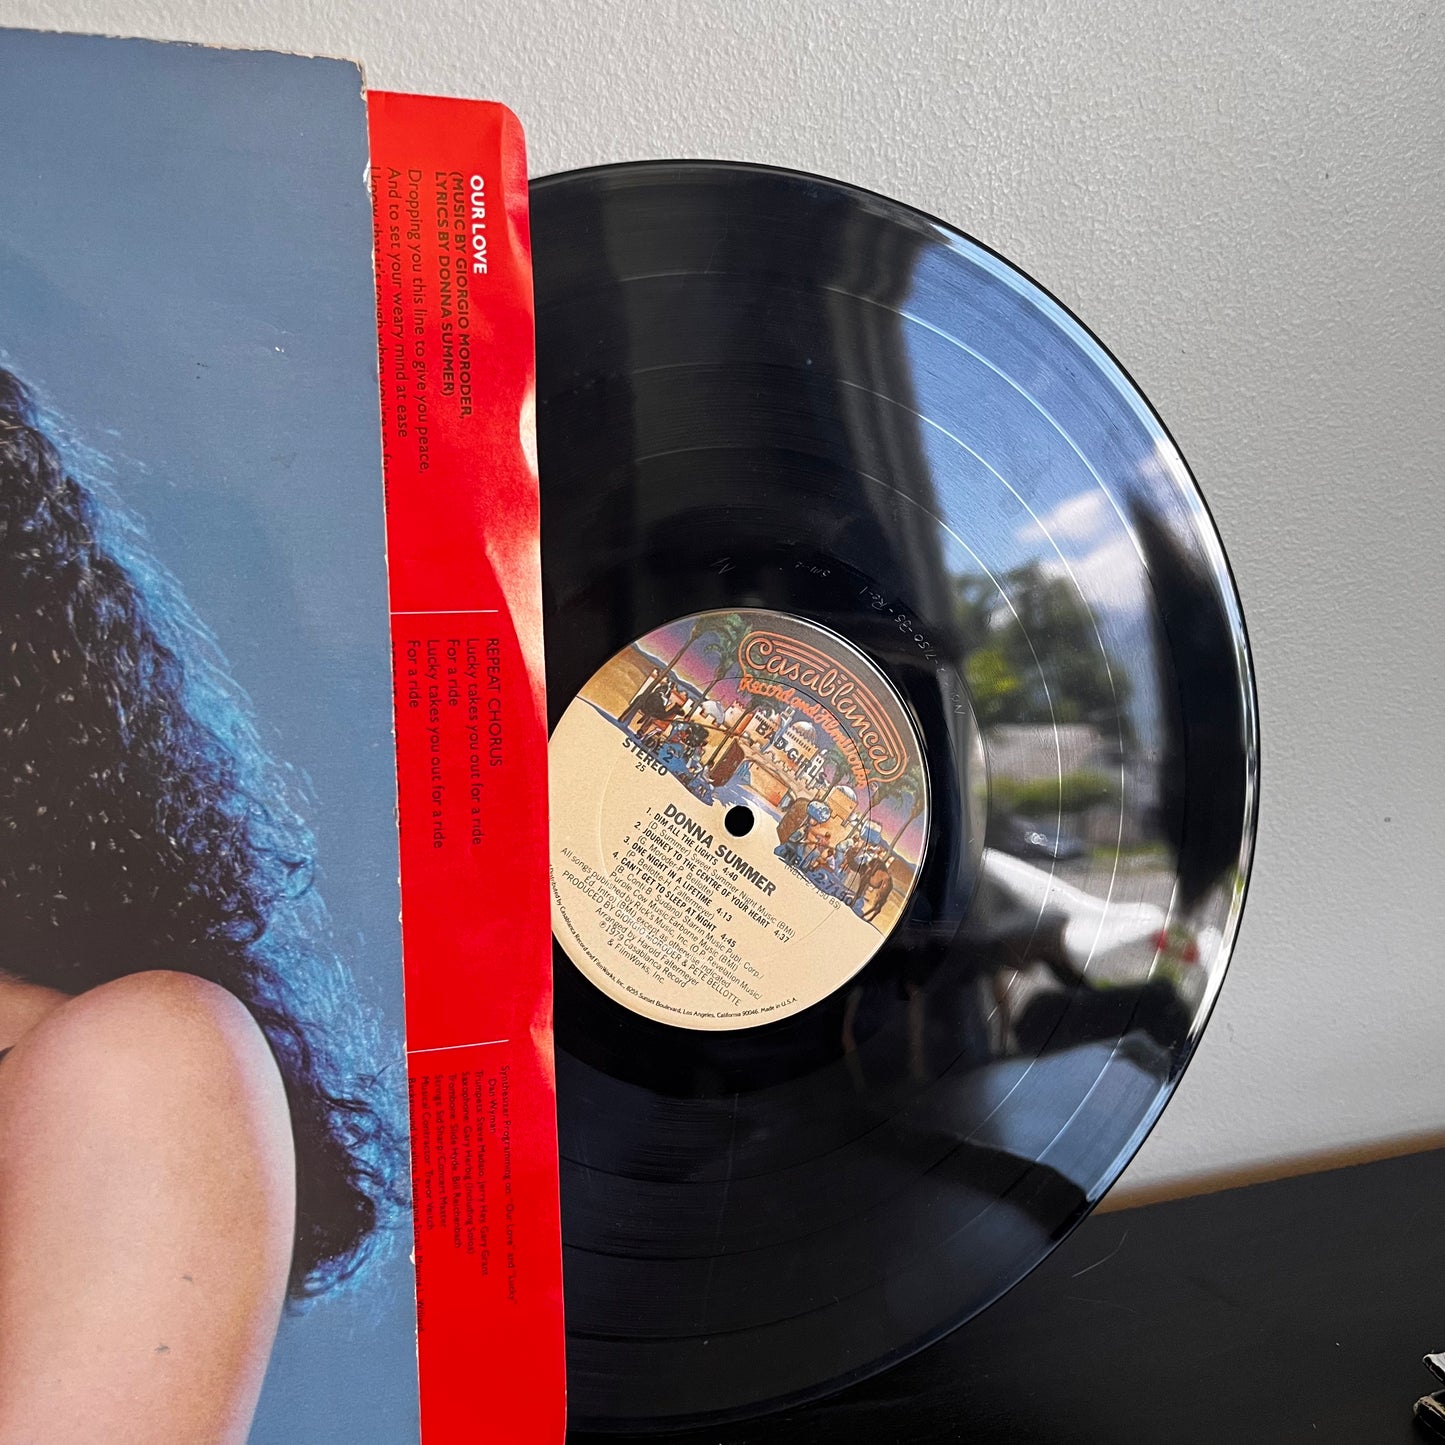 Bad Girls - Donna Summer Used Vinyl 1979 NBLP-2-7150 VG+ Gatefold